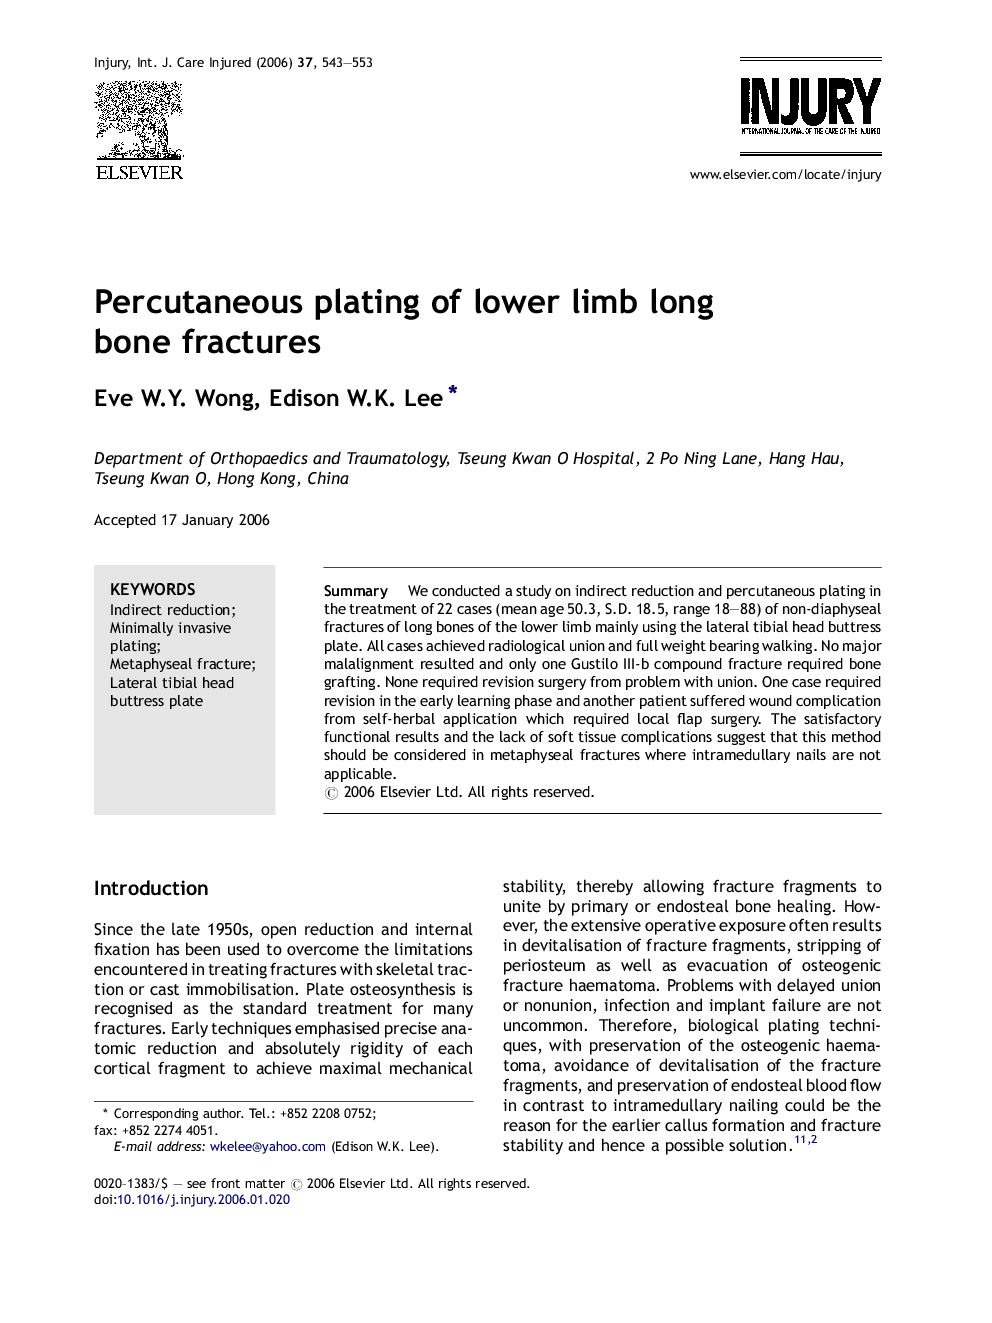 Percutaneous plating of lower limb long bone fractures